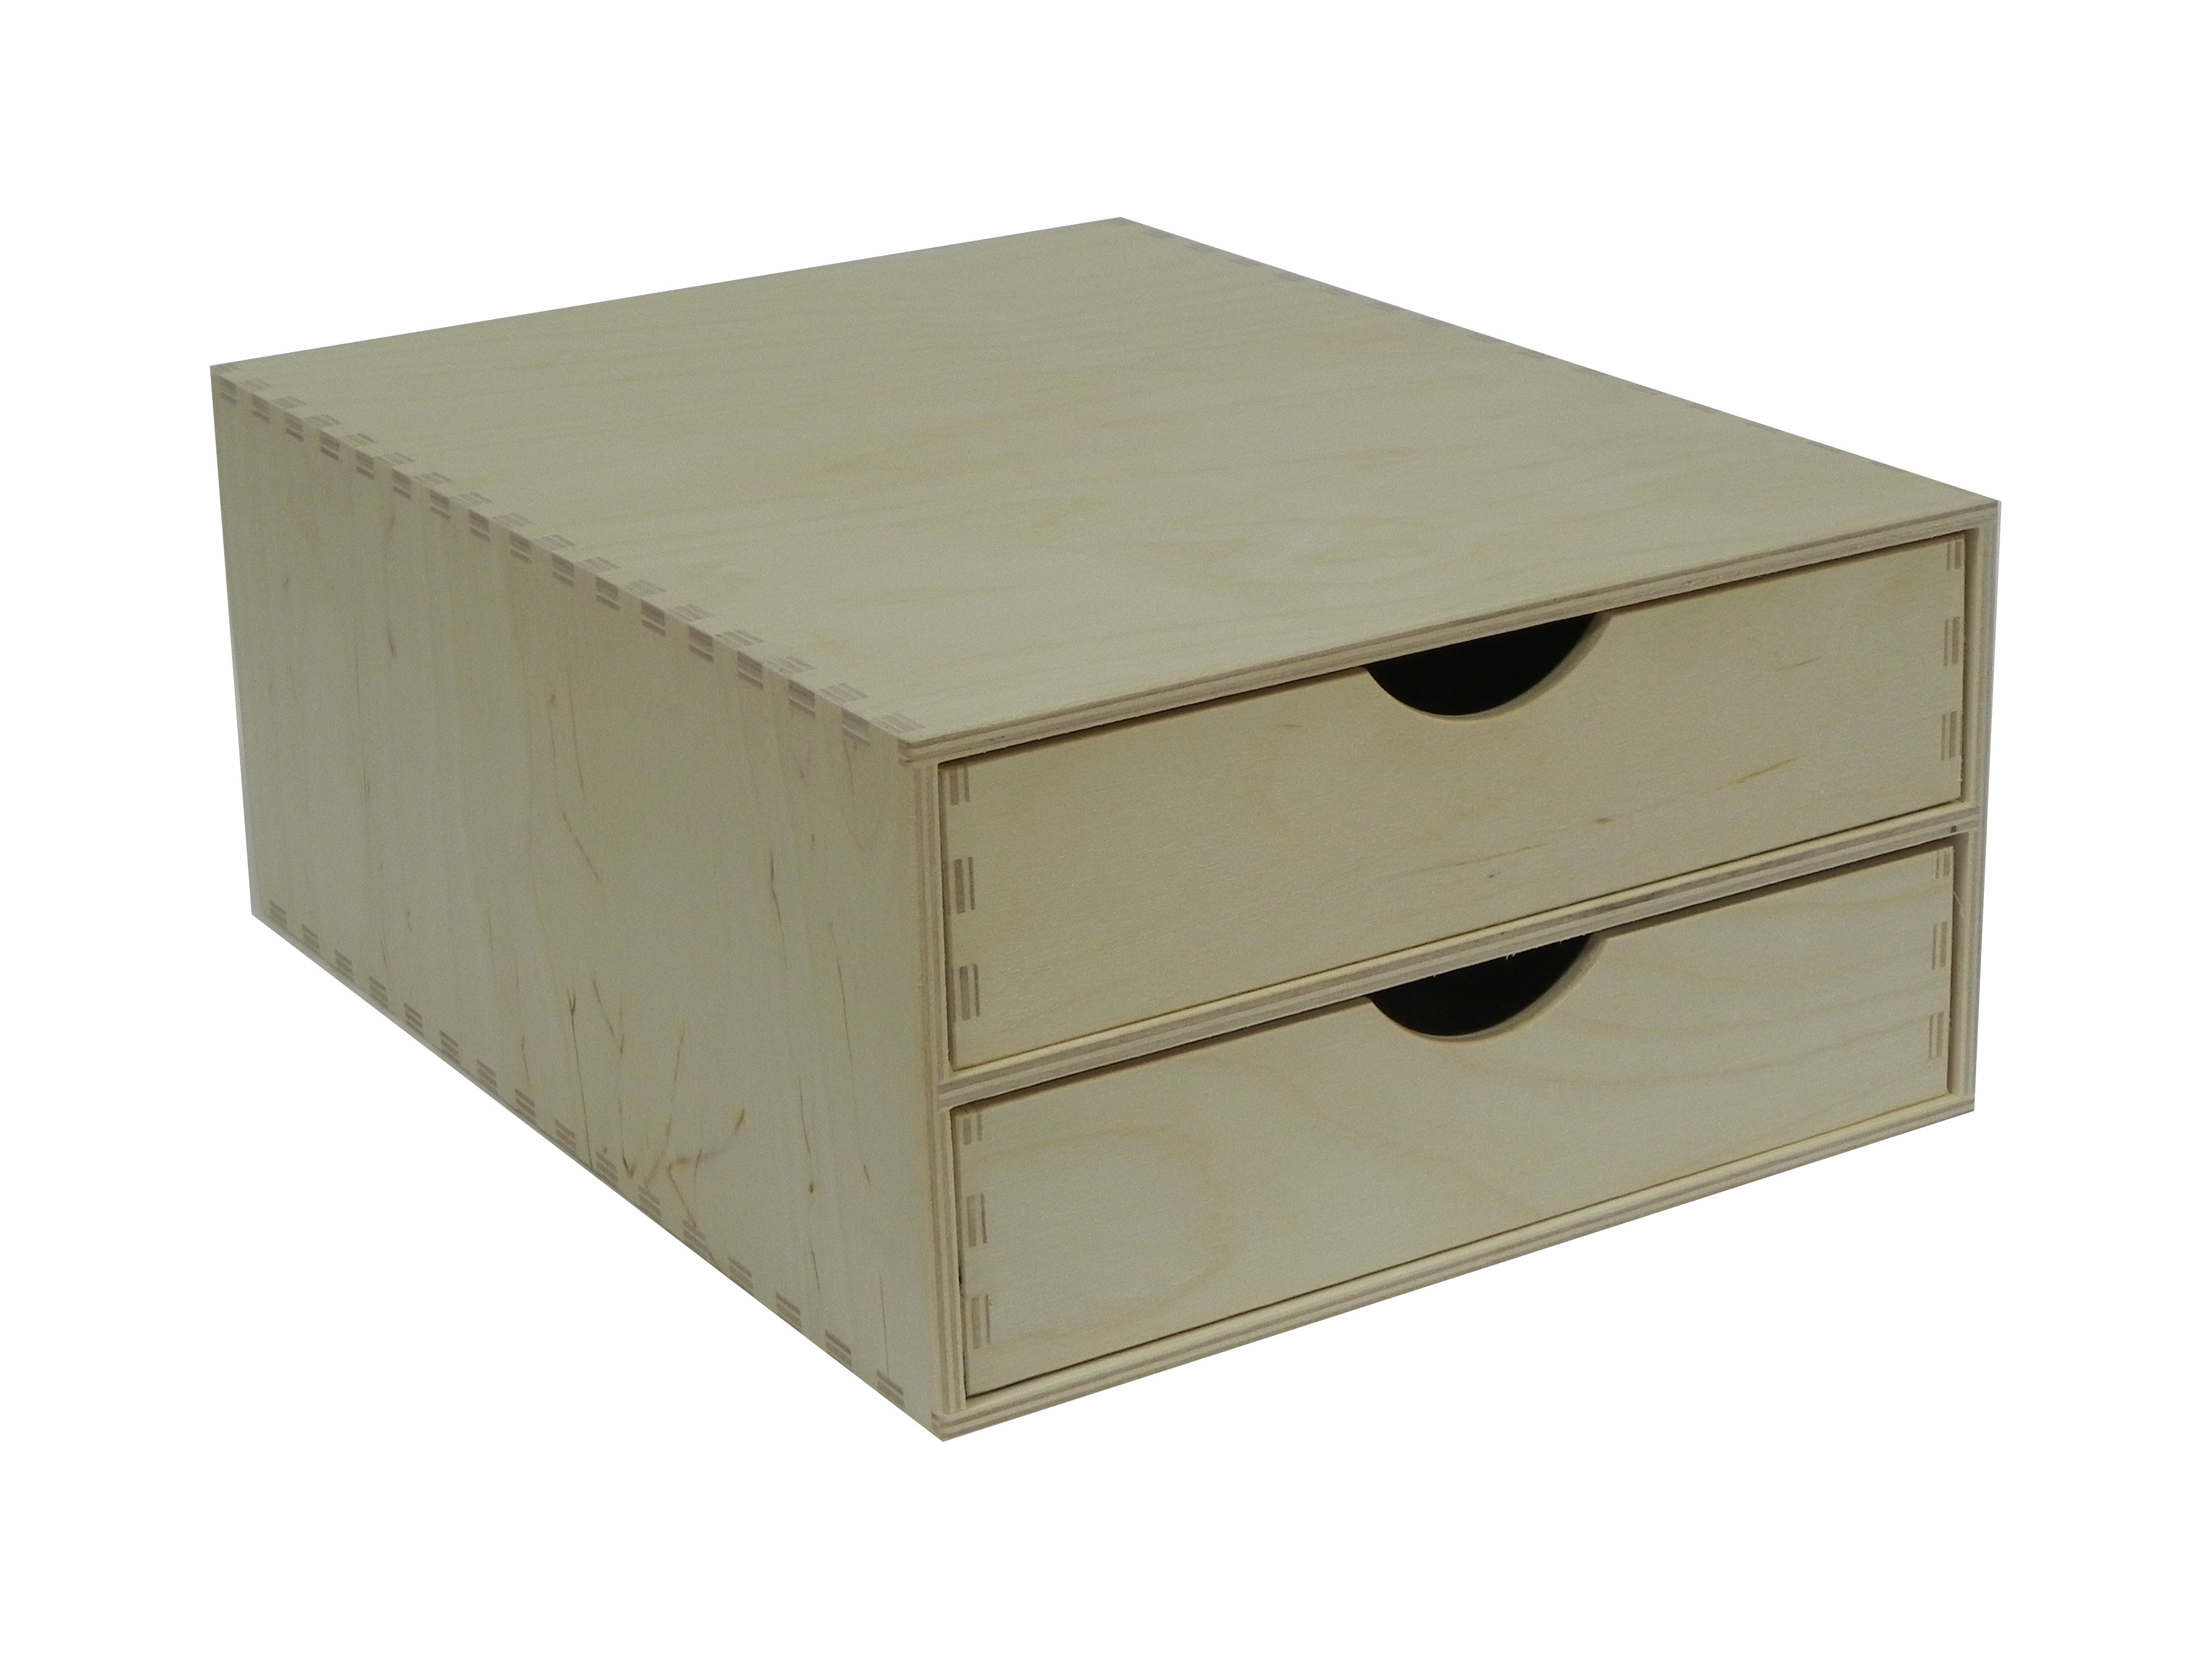 A4 Double Wooden Drawer Box Desktop Office Desk Storage